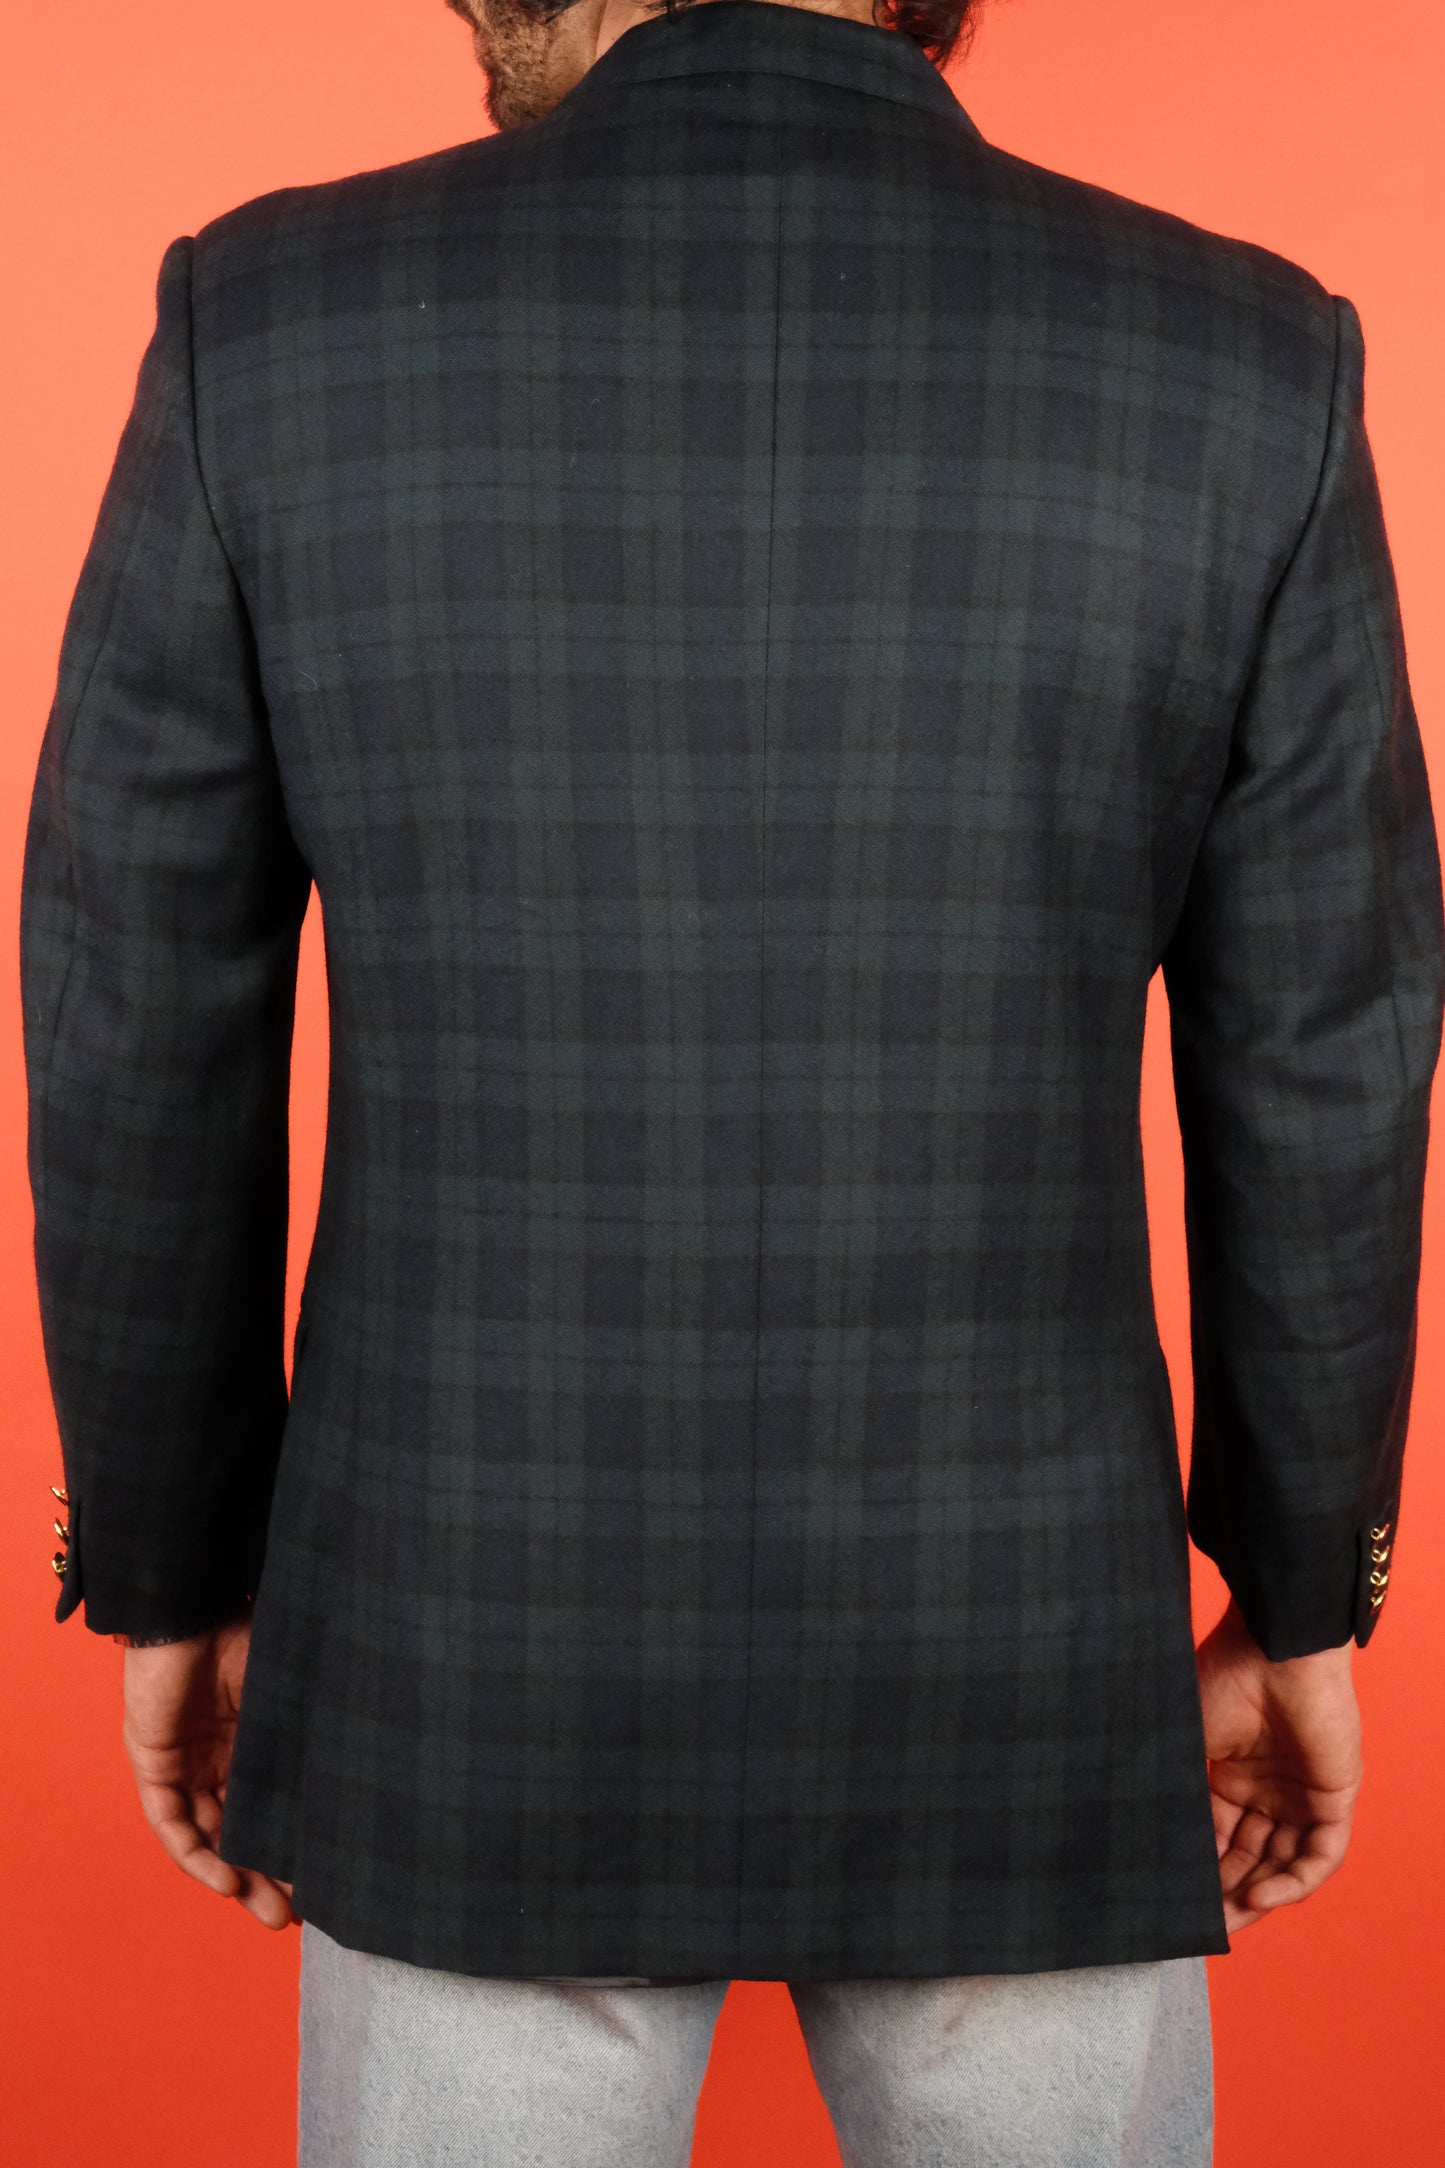 Pierre Cardin Checked Suit Jacket  - vintage clothing clochard92.com